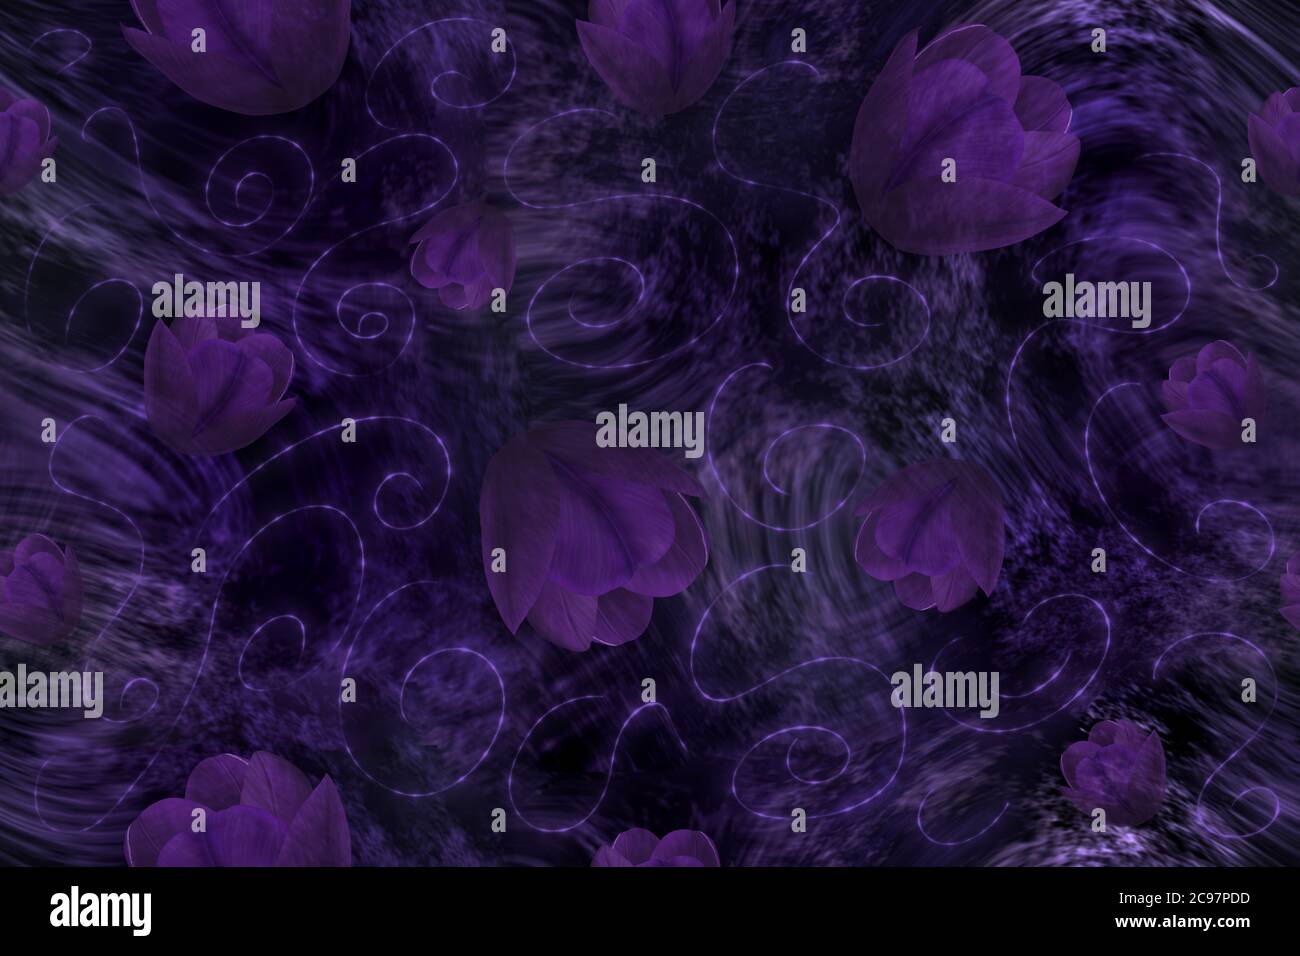 Seamless purple pattern with tulips. Digital art. Stock Photo